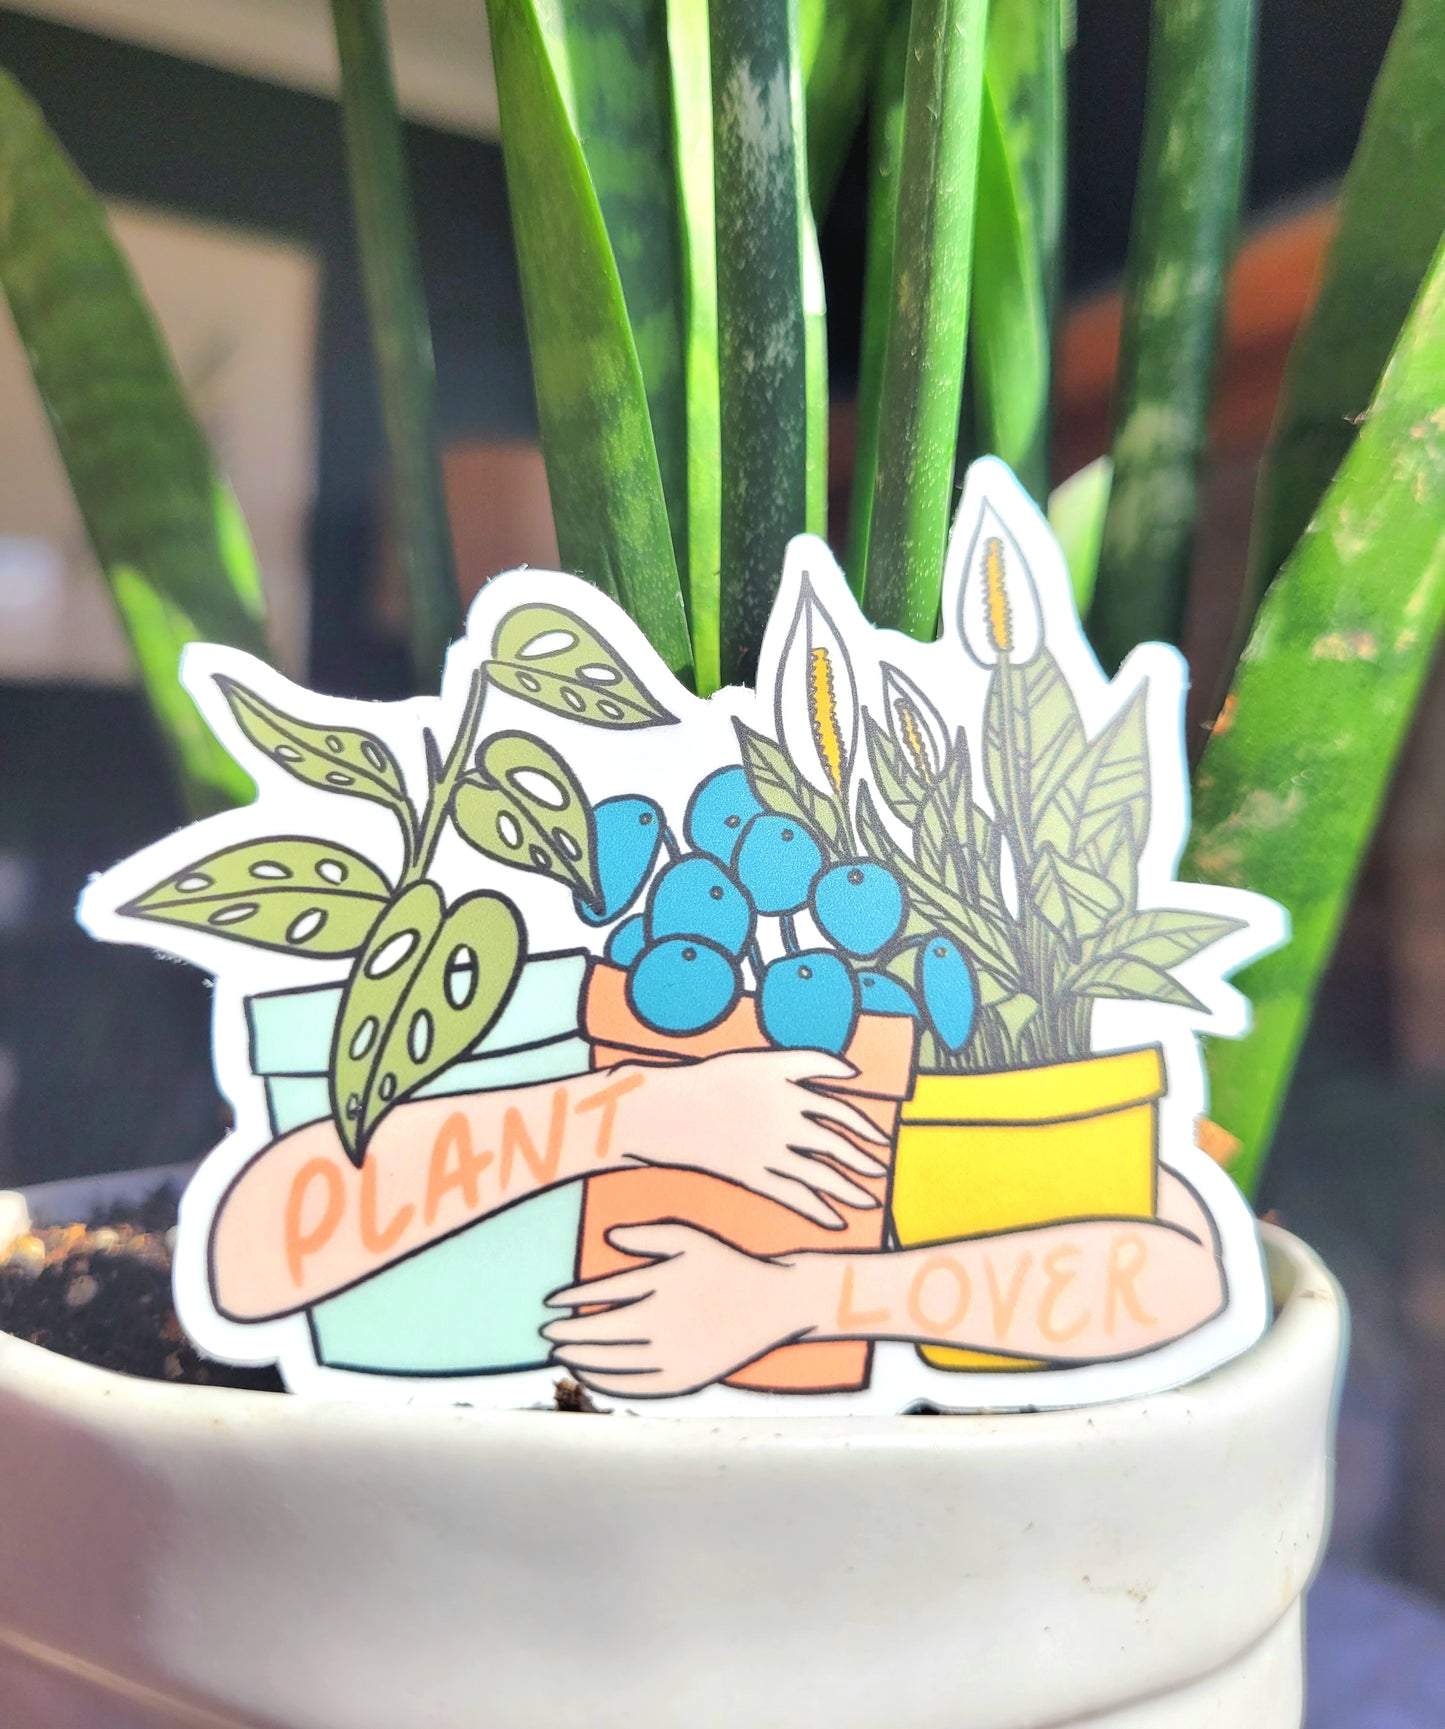 Plant Lover Sticker